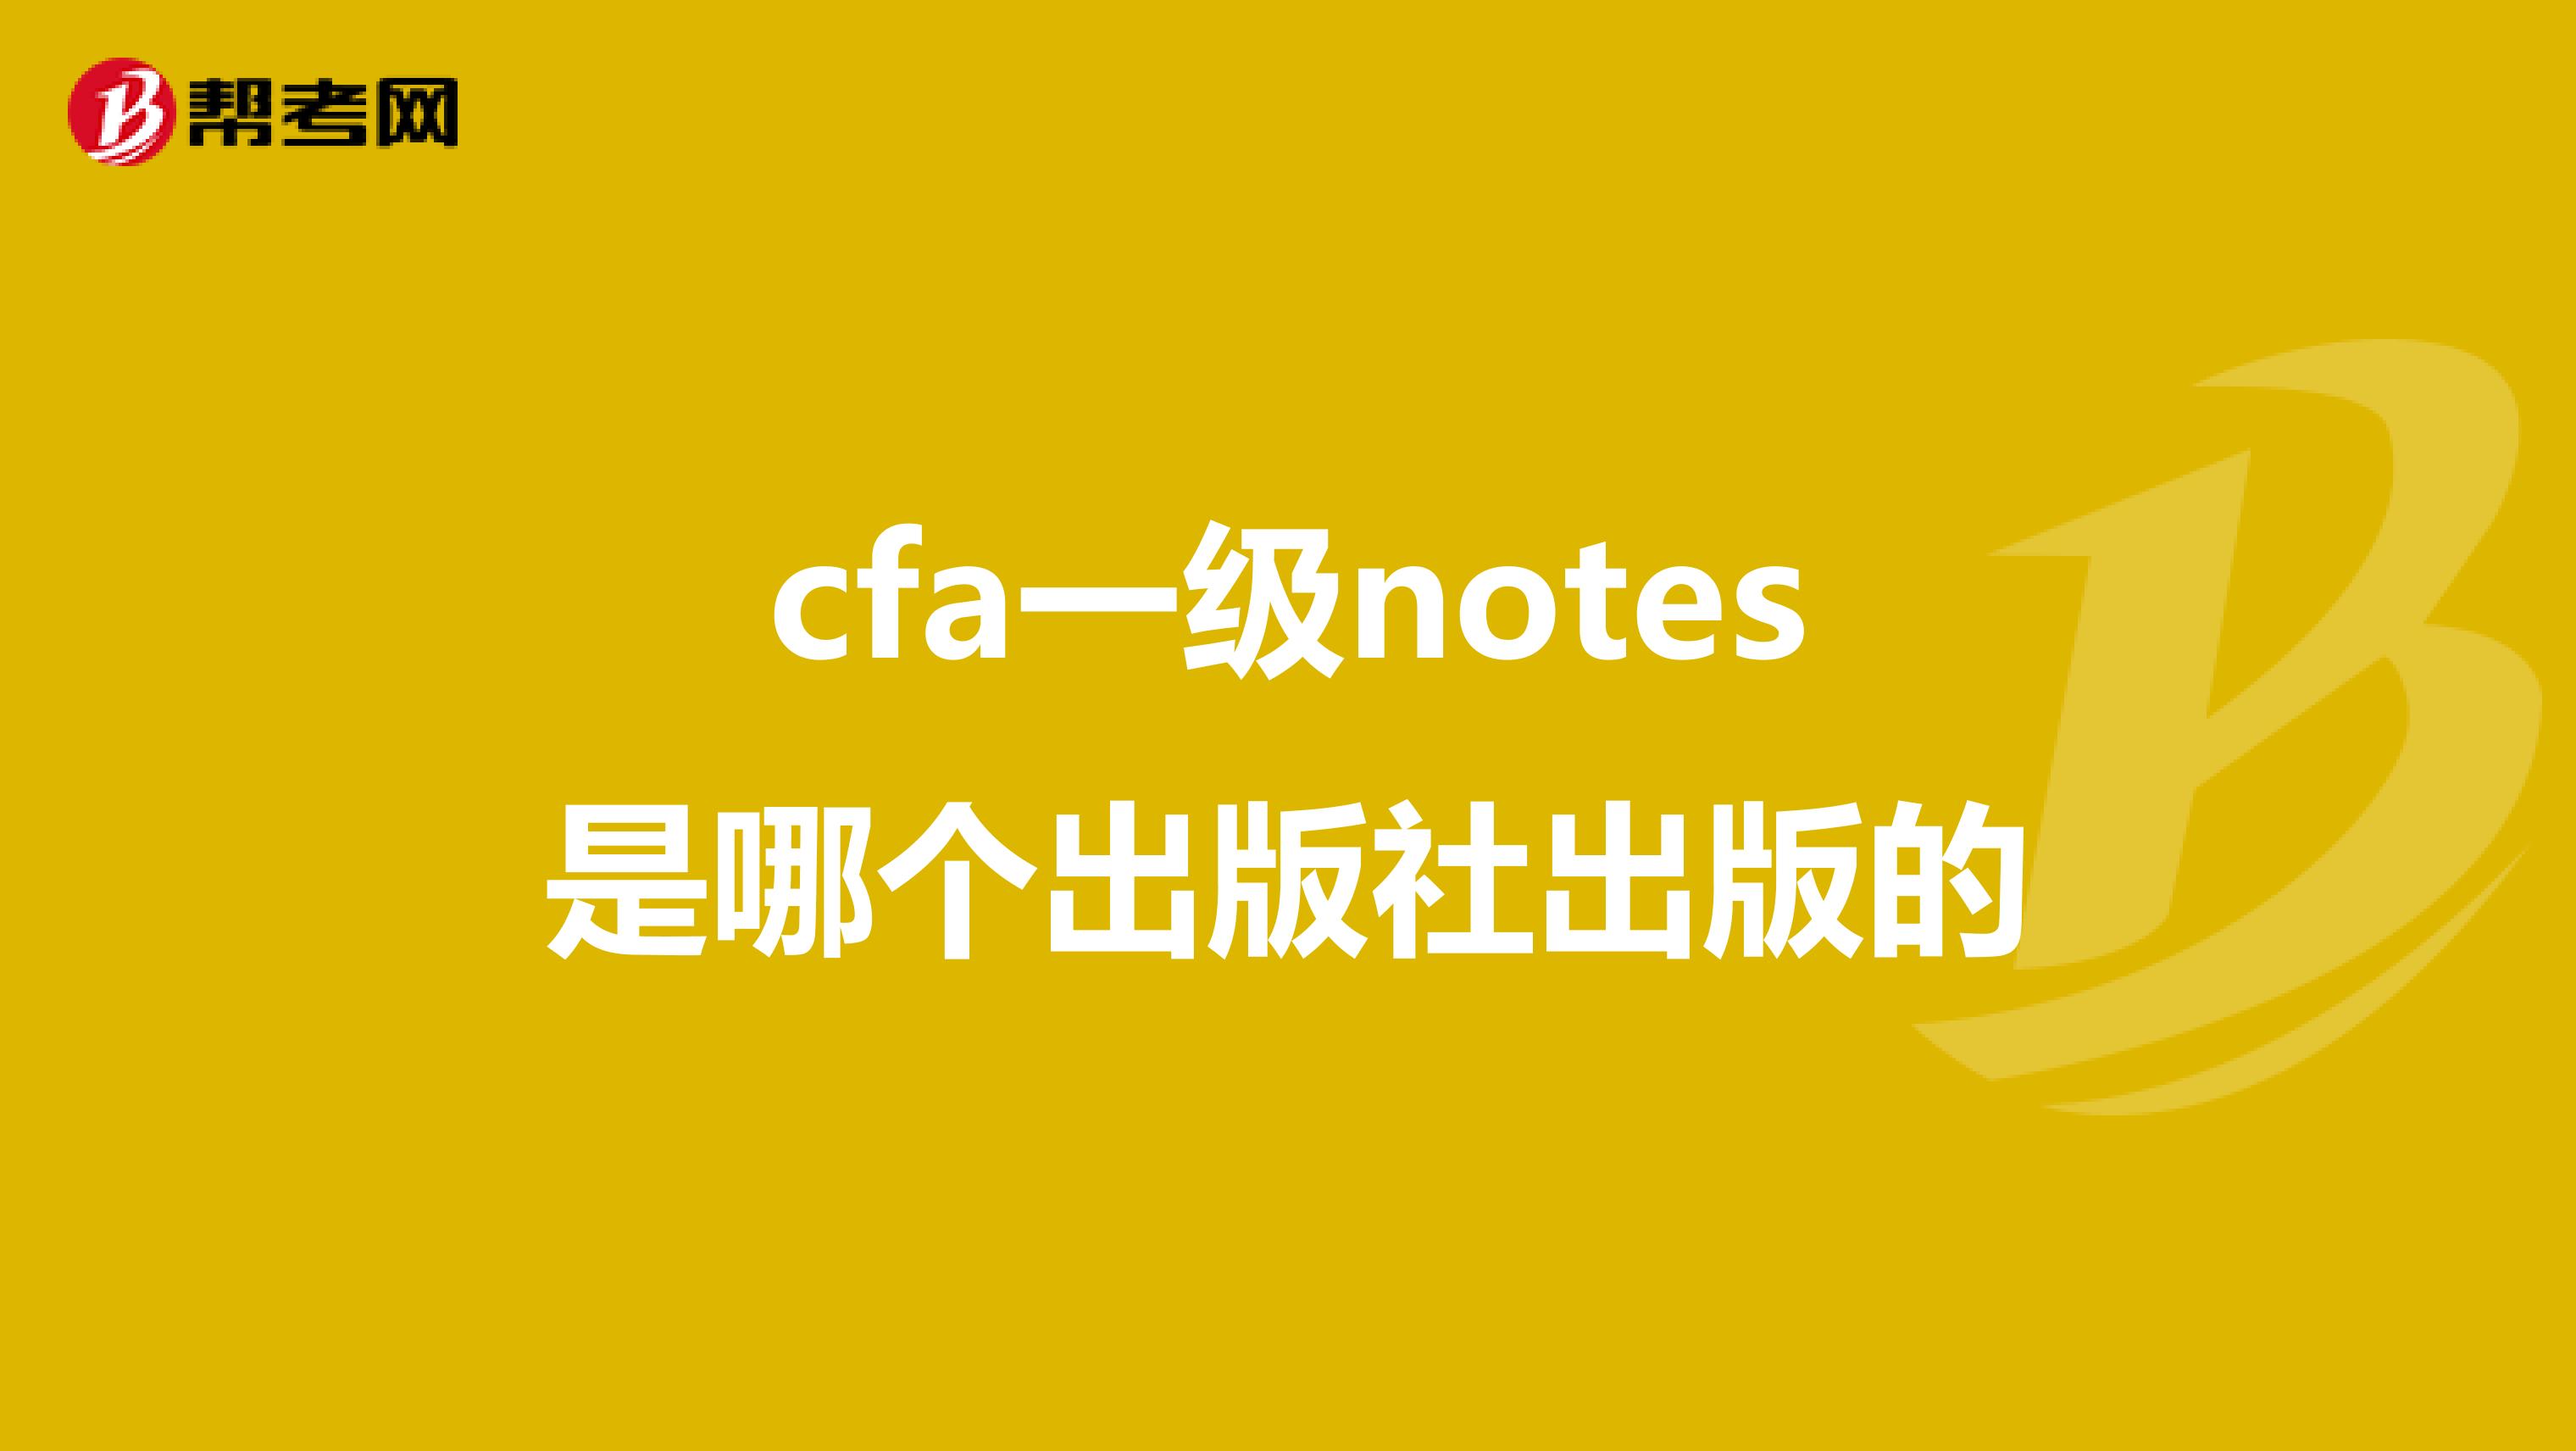 cfa一级notes是哪个出版社出版的